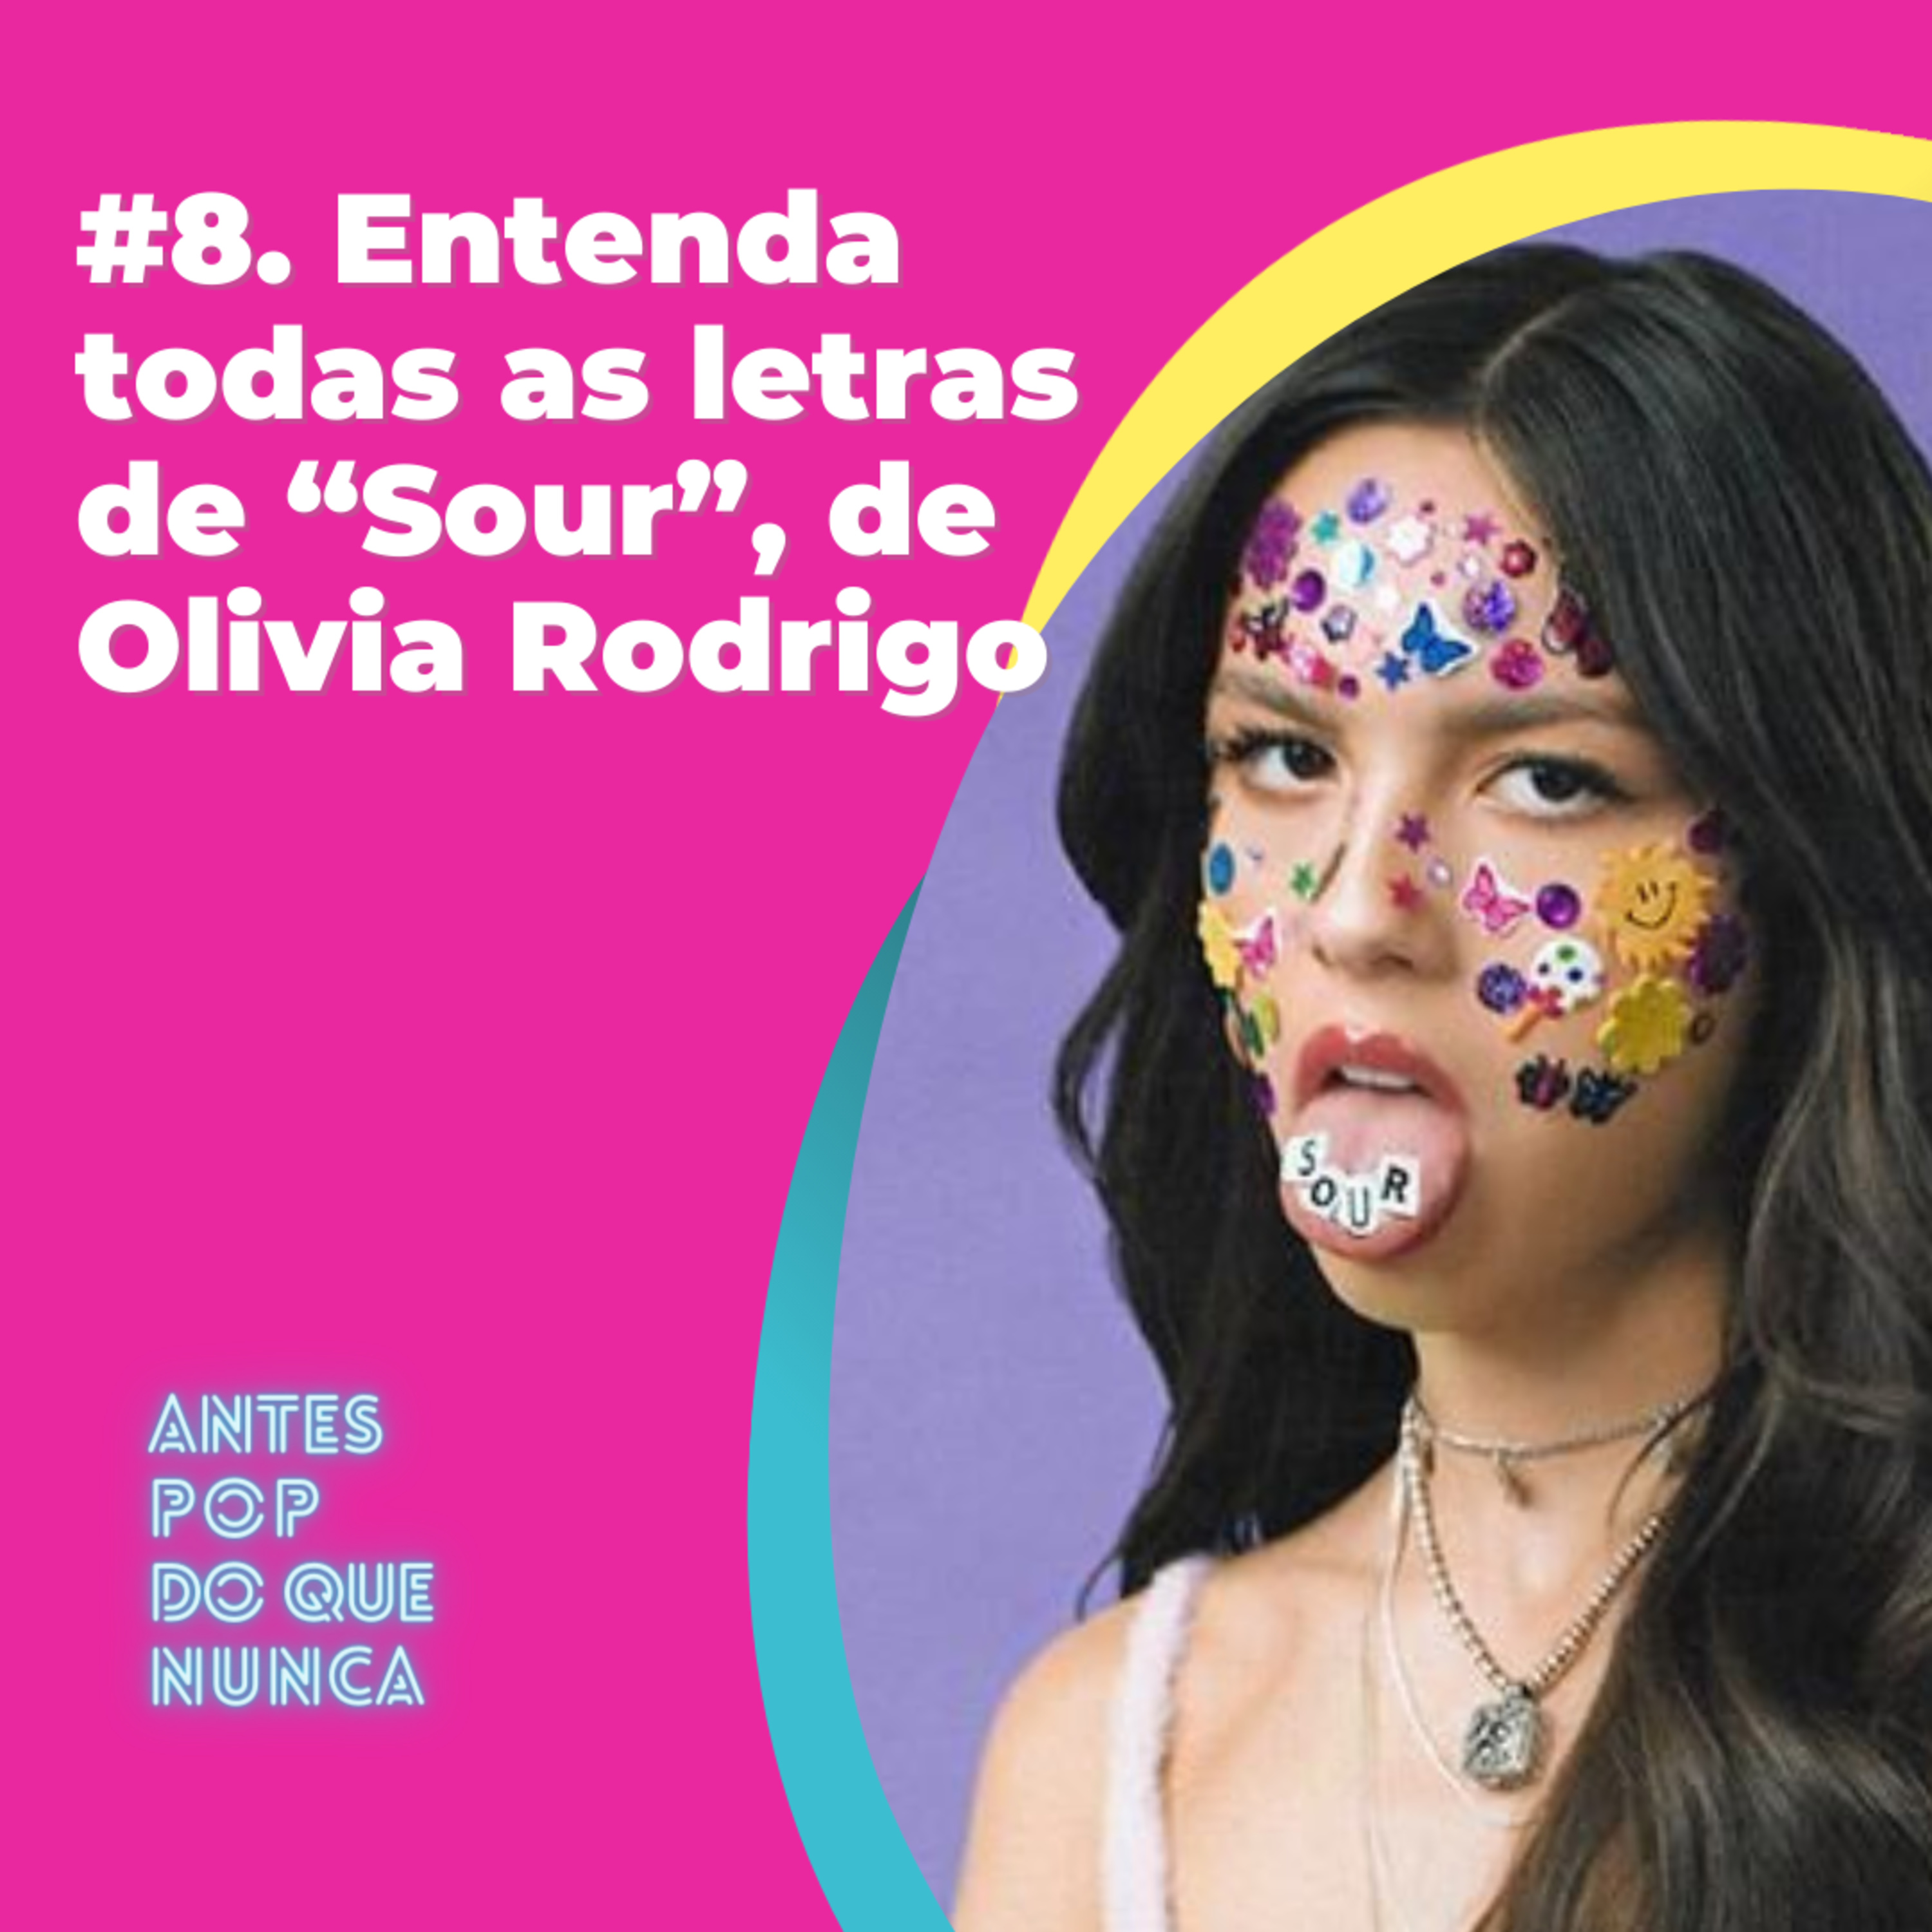 #8. Entenda todas as letras de “Sour”, de Olivia Rodrigo